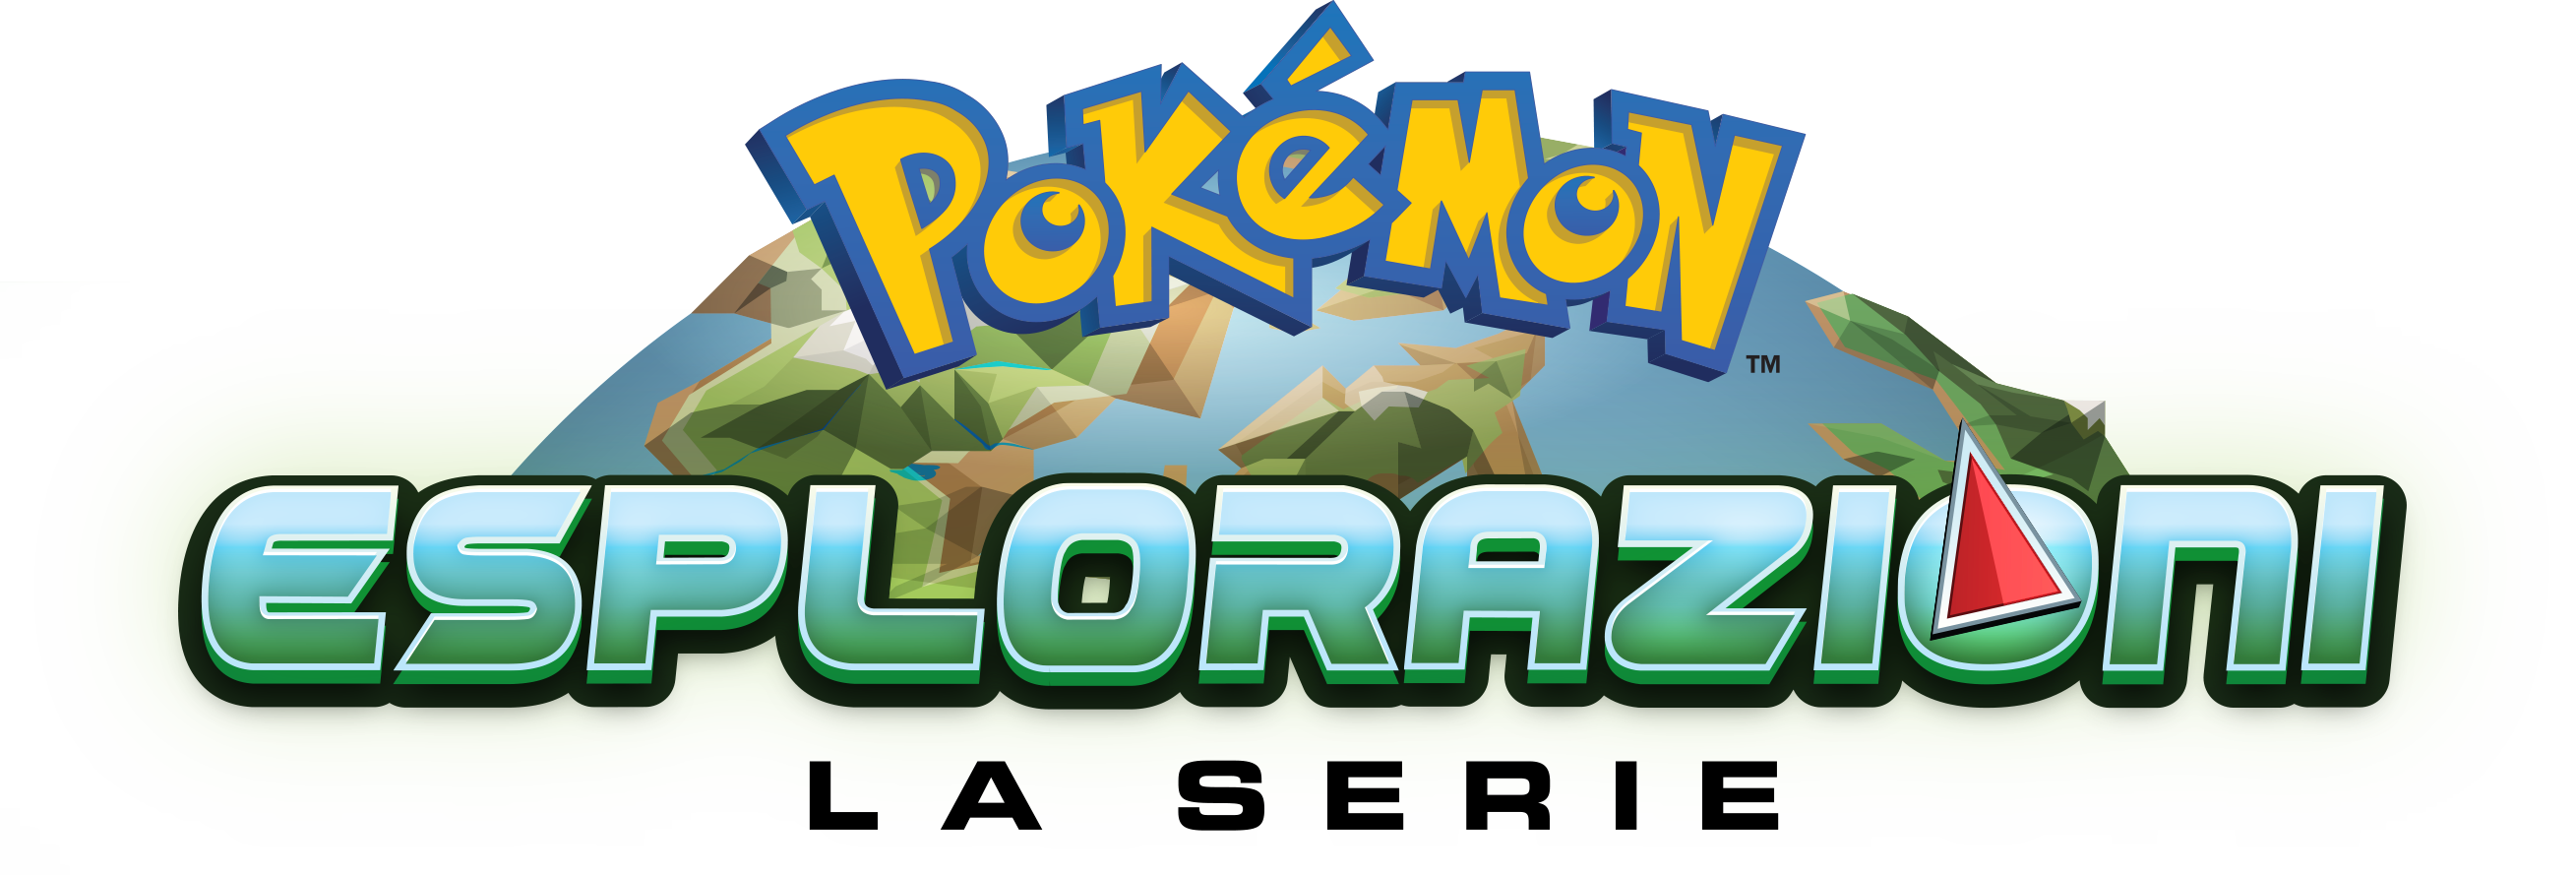 Esplorazioni Pokémon logo